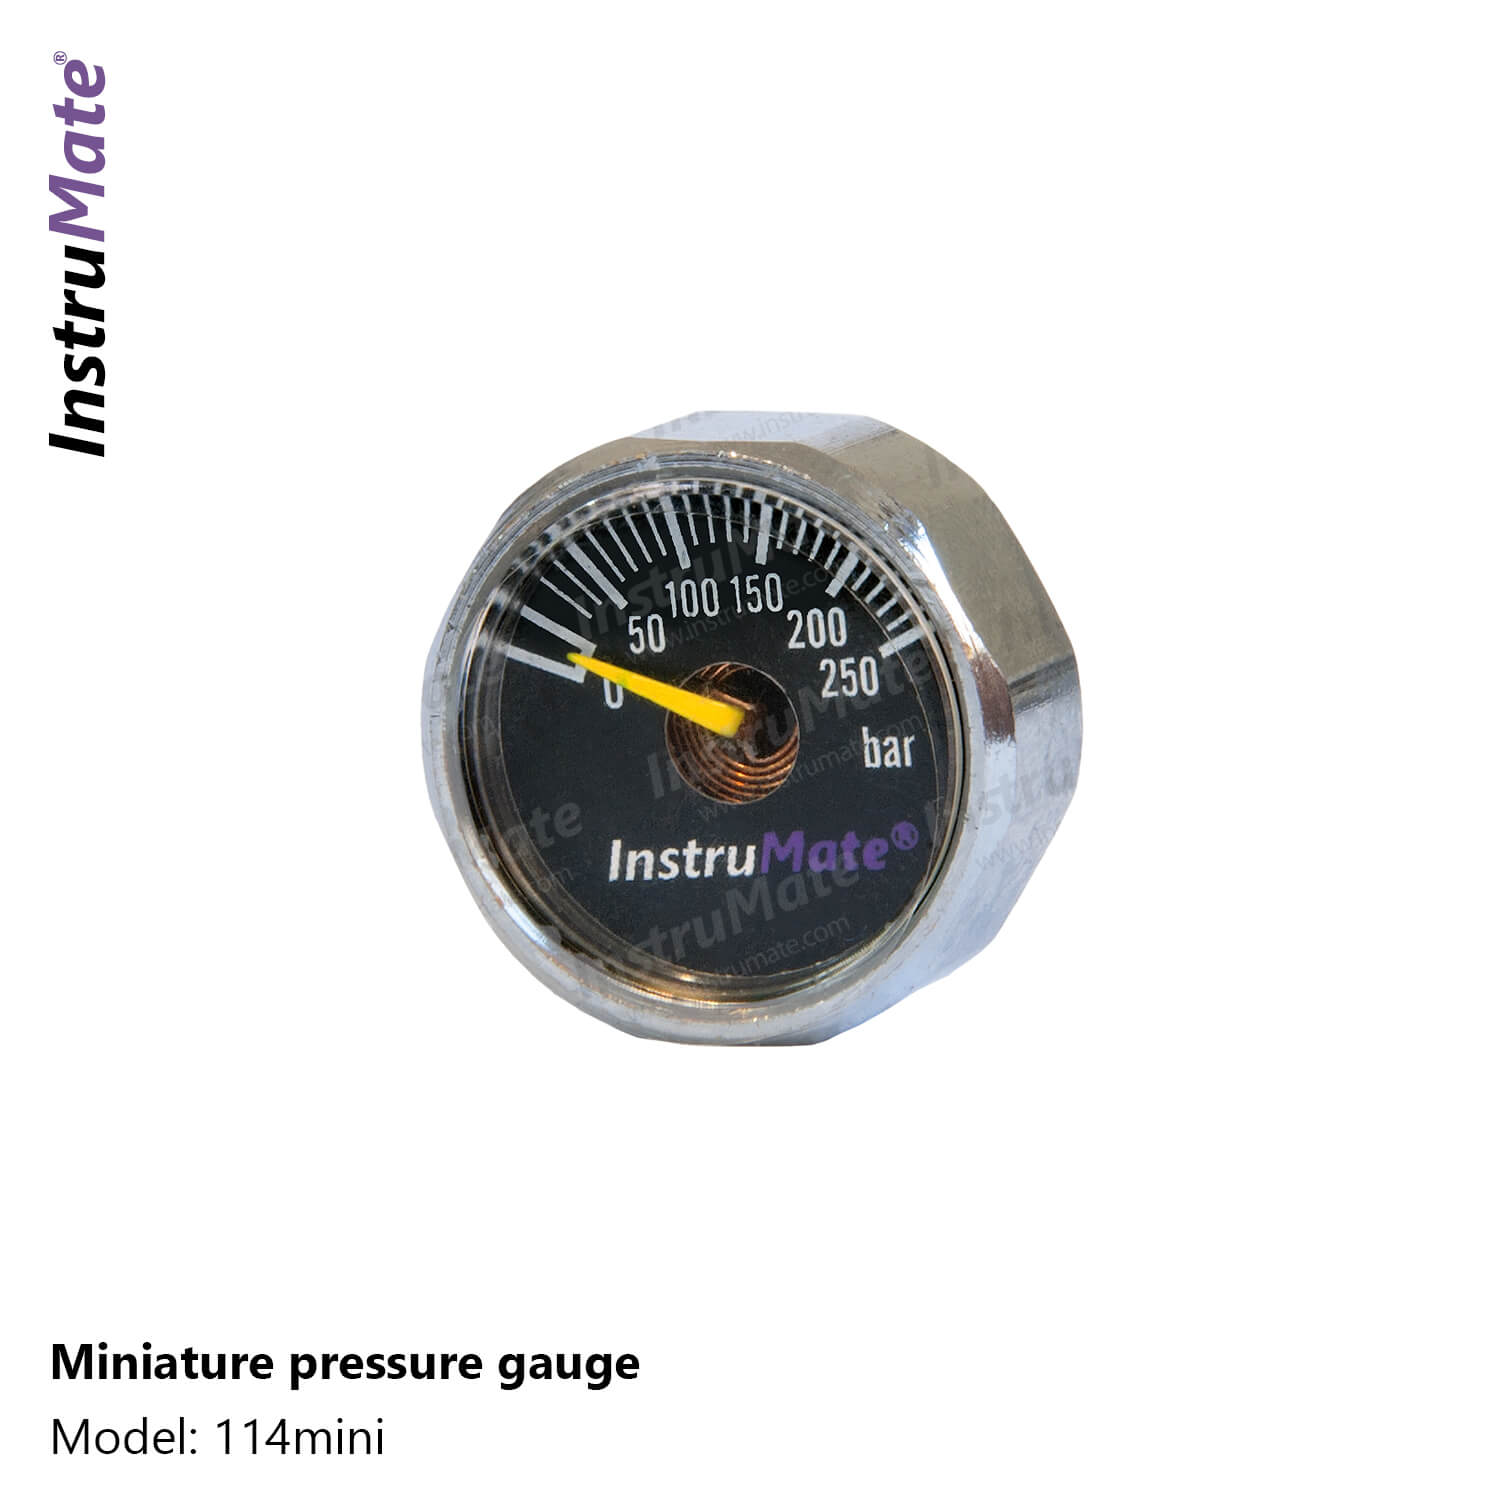 Mini pressure gauge - 114mini - Instrumate